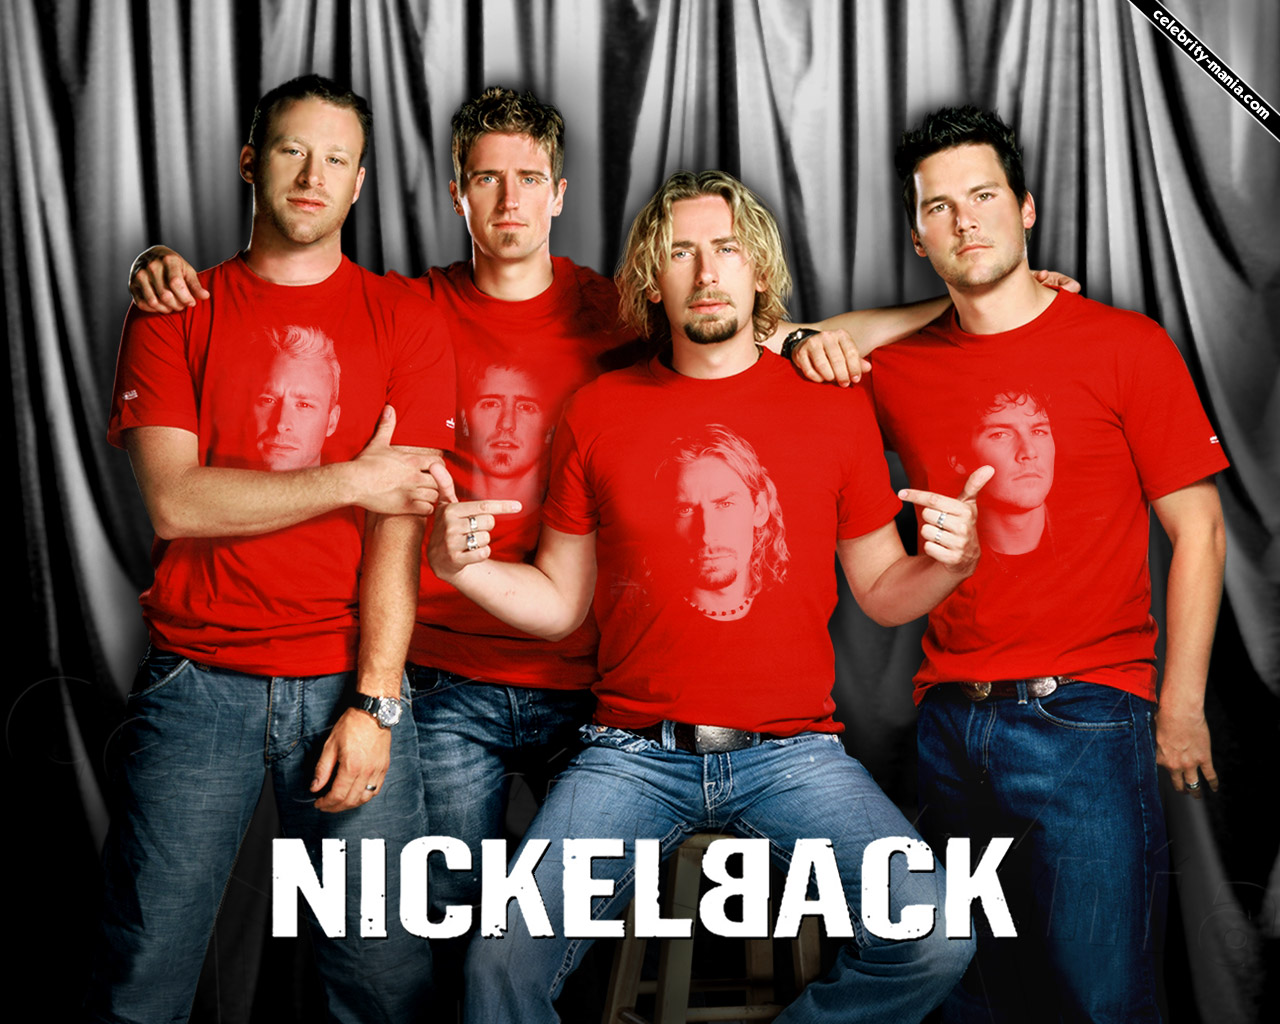 Nickelback-nickelback-25842858-1280-1024